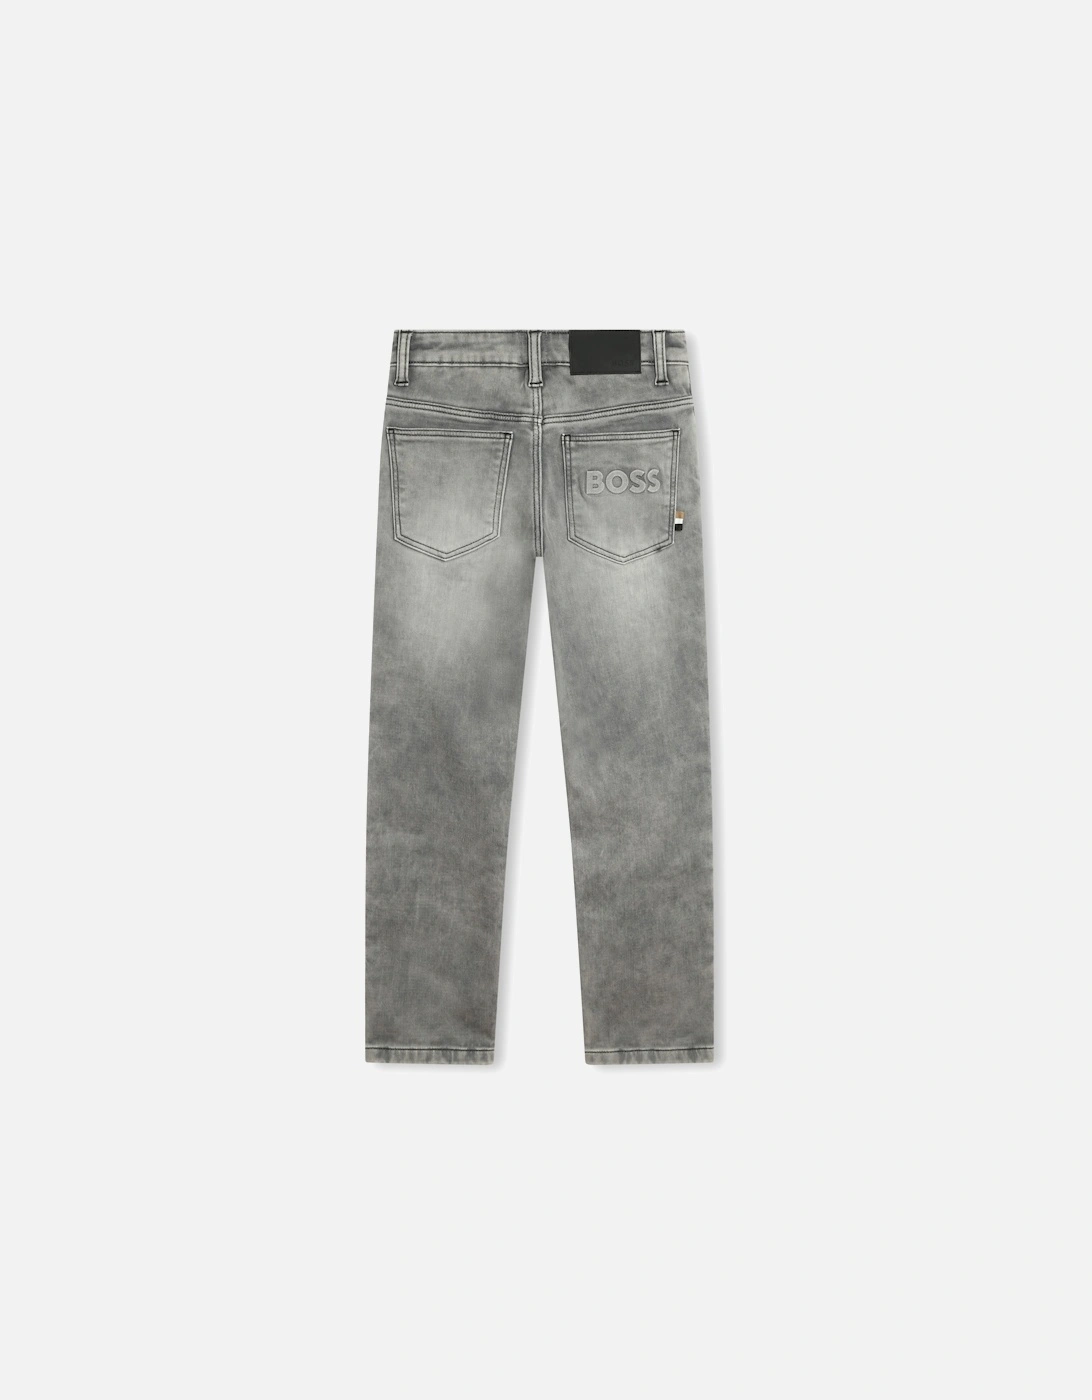 Juniors Denim Jeans (Grey)